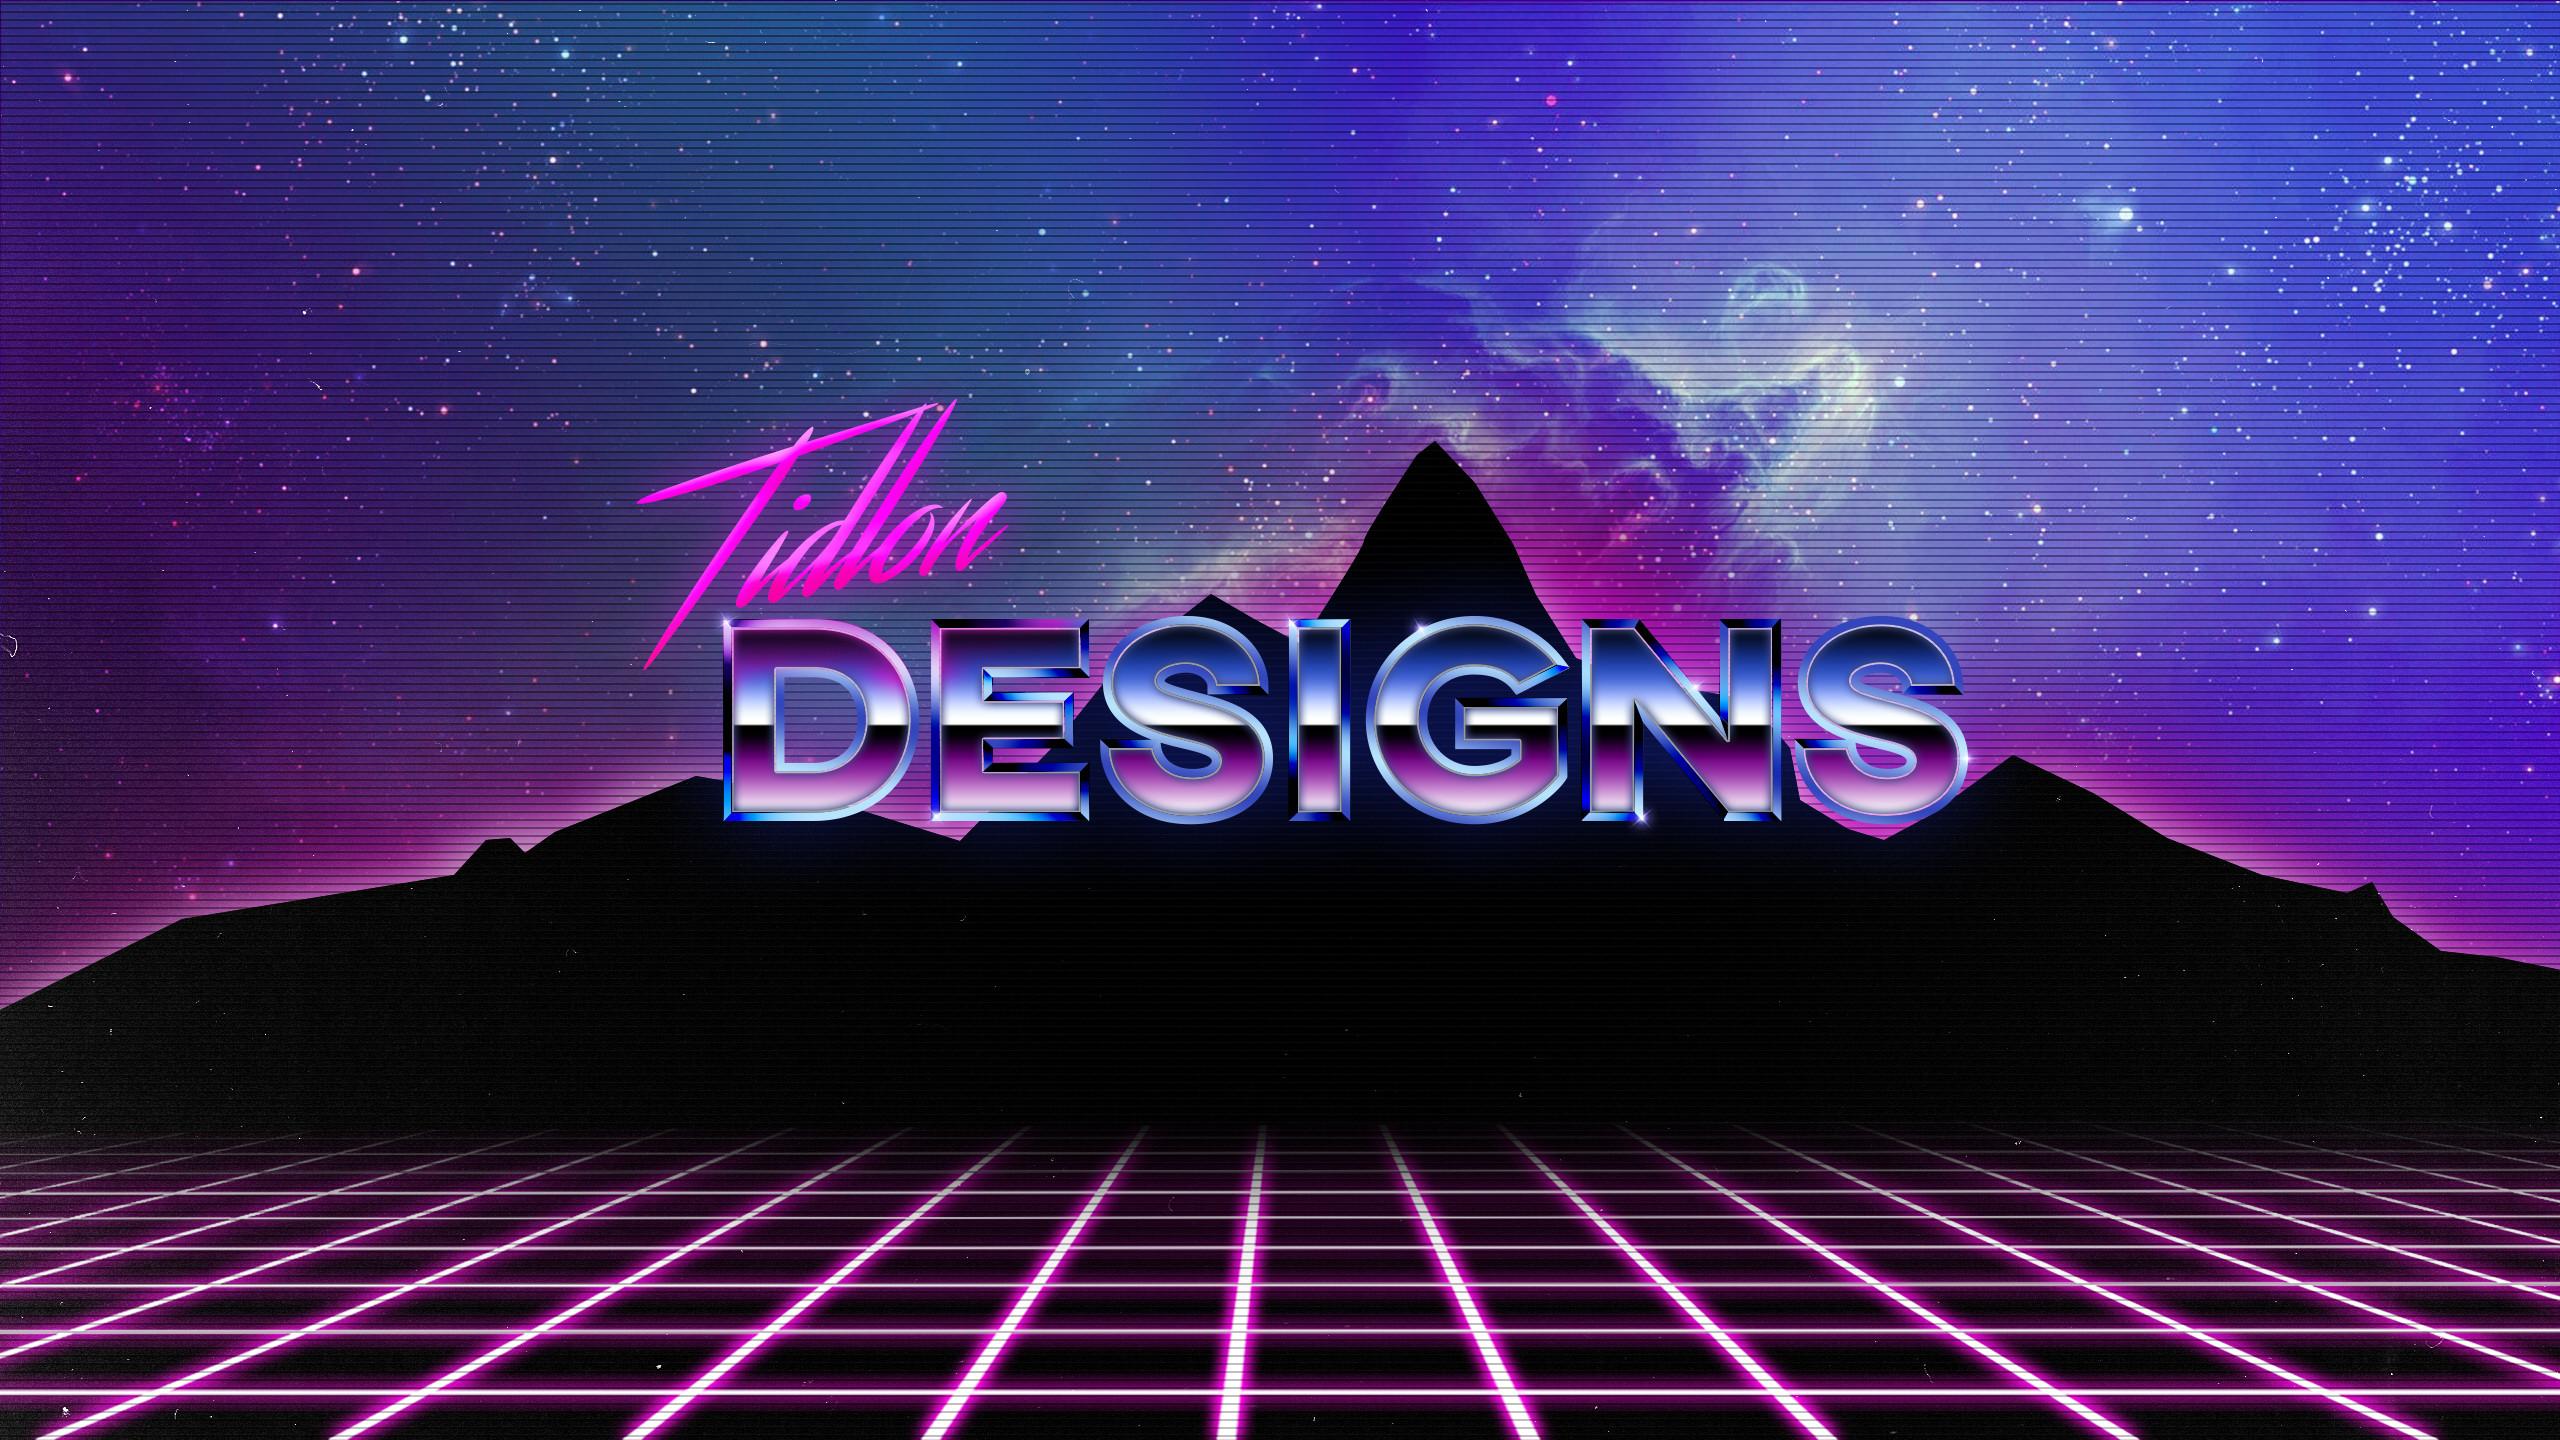 A futuristic logo design for a company called Tilton Designs. - 80s